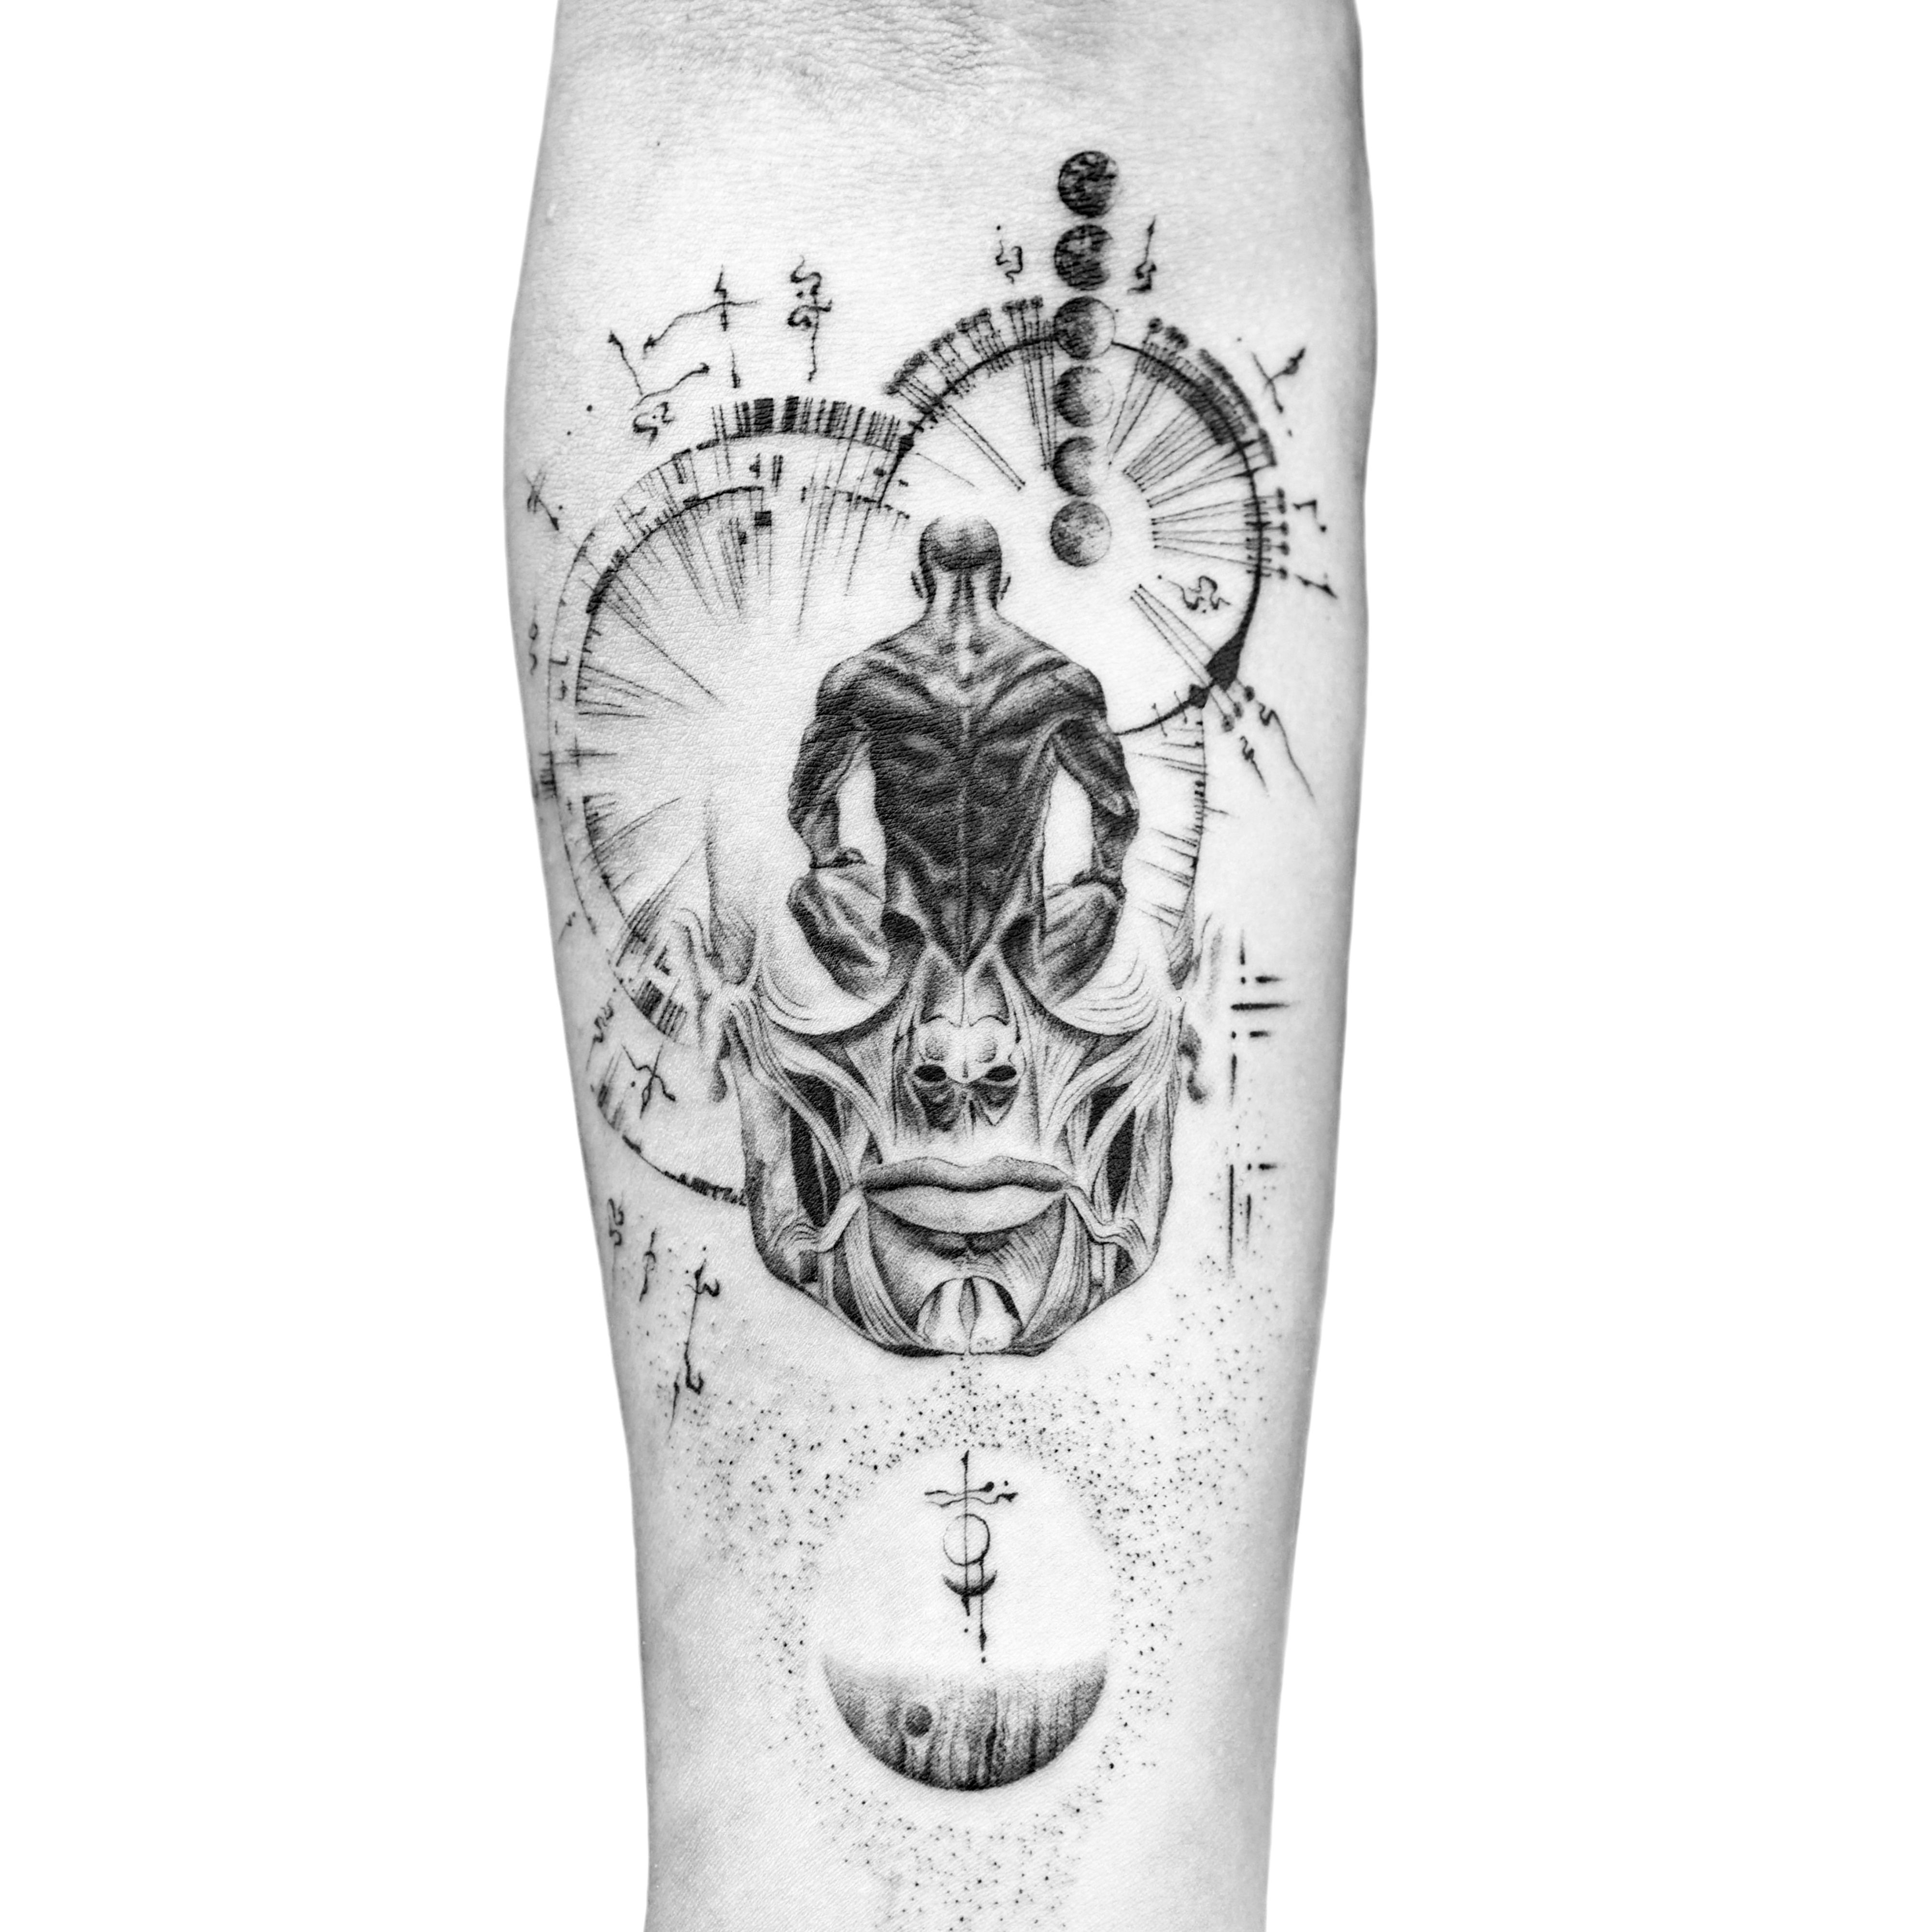 Tattoo uploaded by Naoko Tattoo • Shaolin Cat tattoo Flash #cattattoos #cat  #shaolin #tattoo #Tattoodo #blackandgreytattoo #BlackworkTattoos  #blackworktattoo #blackwork #dark #japanese #france #paris #naokotattoo  #cutetattoos #tattooflash • Tattoodo